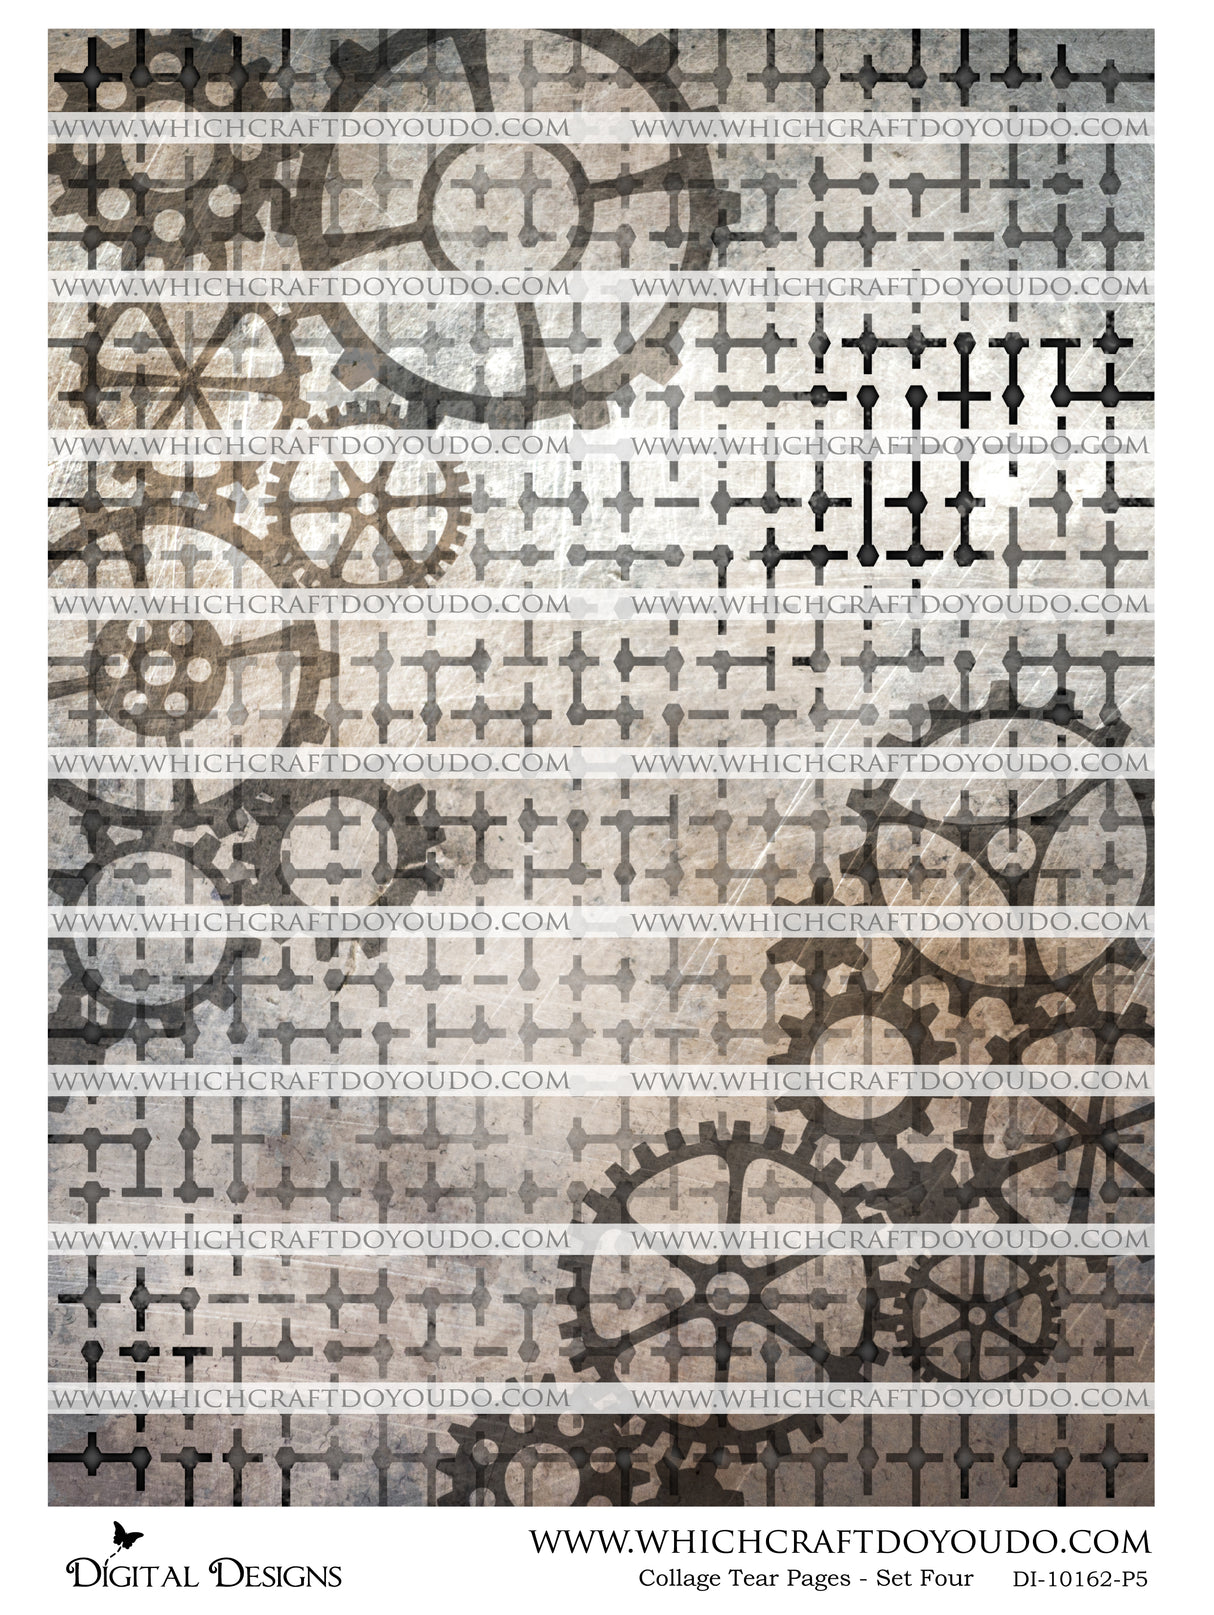 Collage Tear Pages - Set Four - DI-10162 - Digital Download